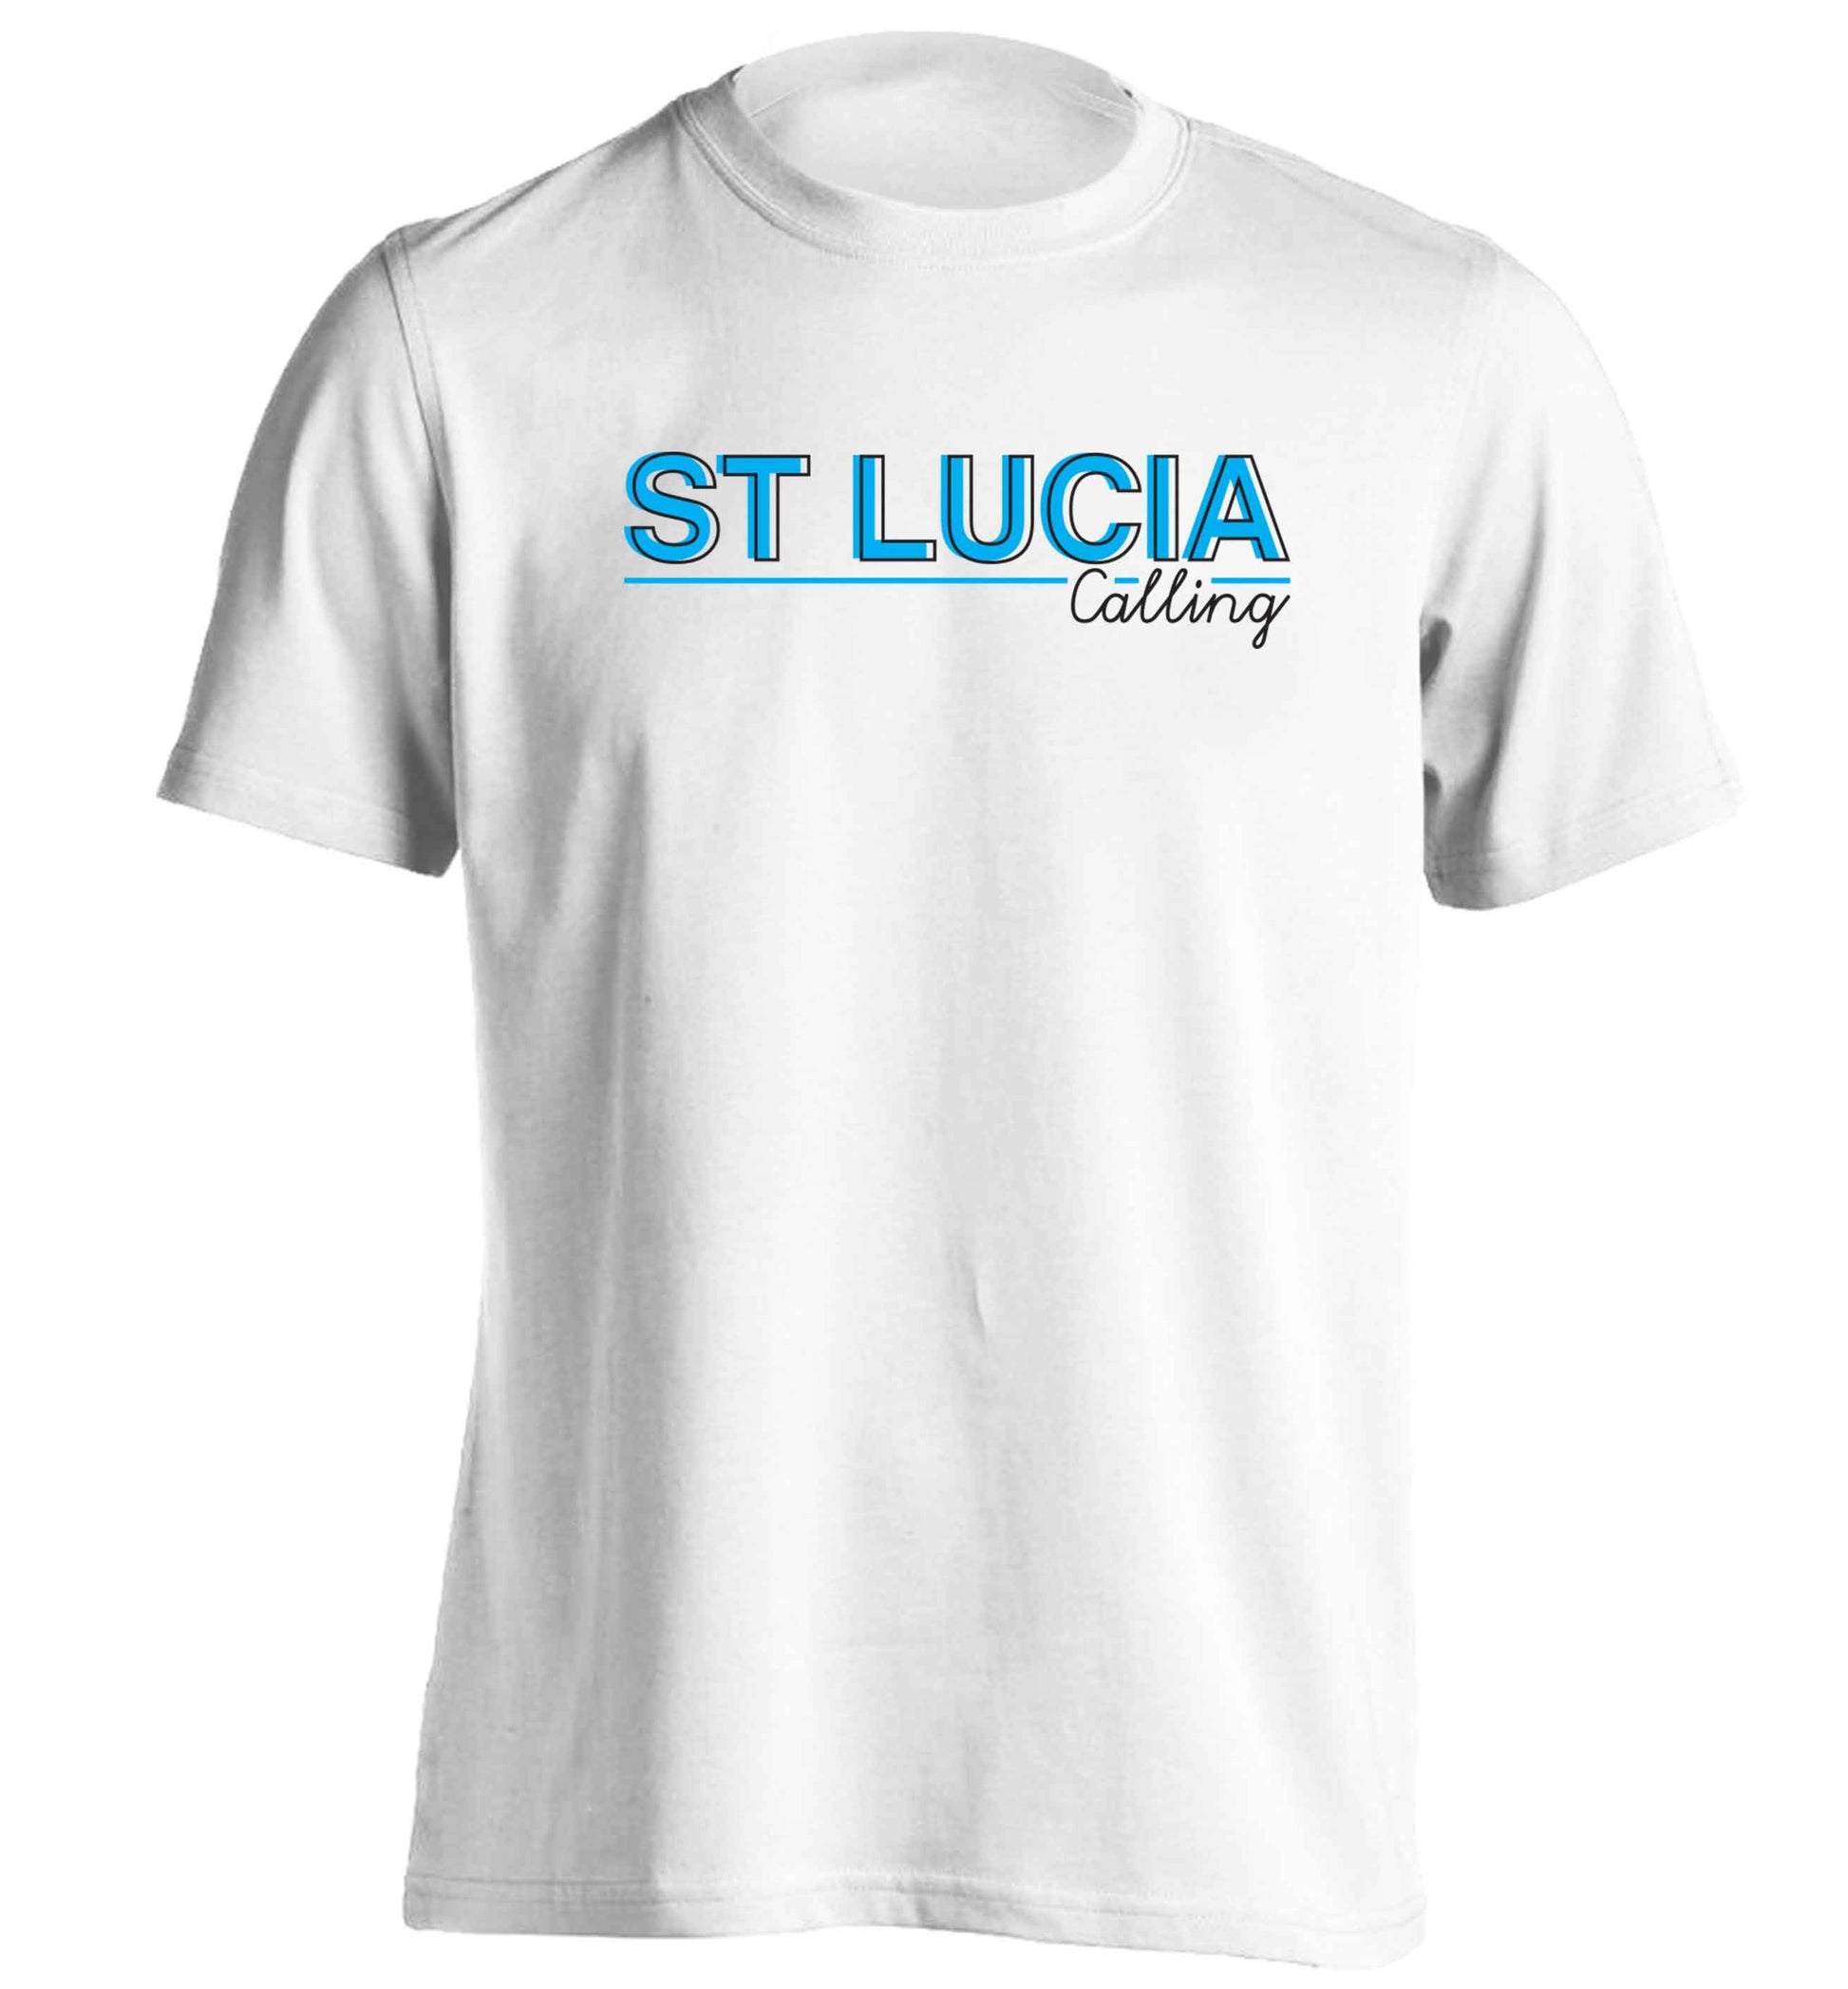 St Lucia calling adults unisex white Tshirt 2XL